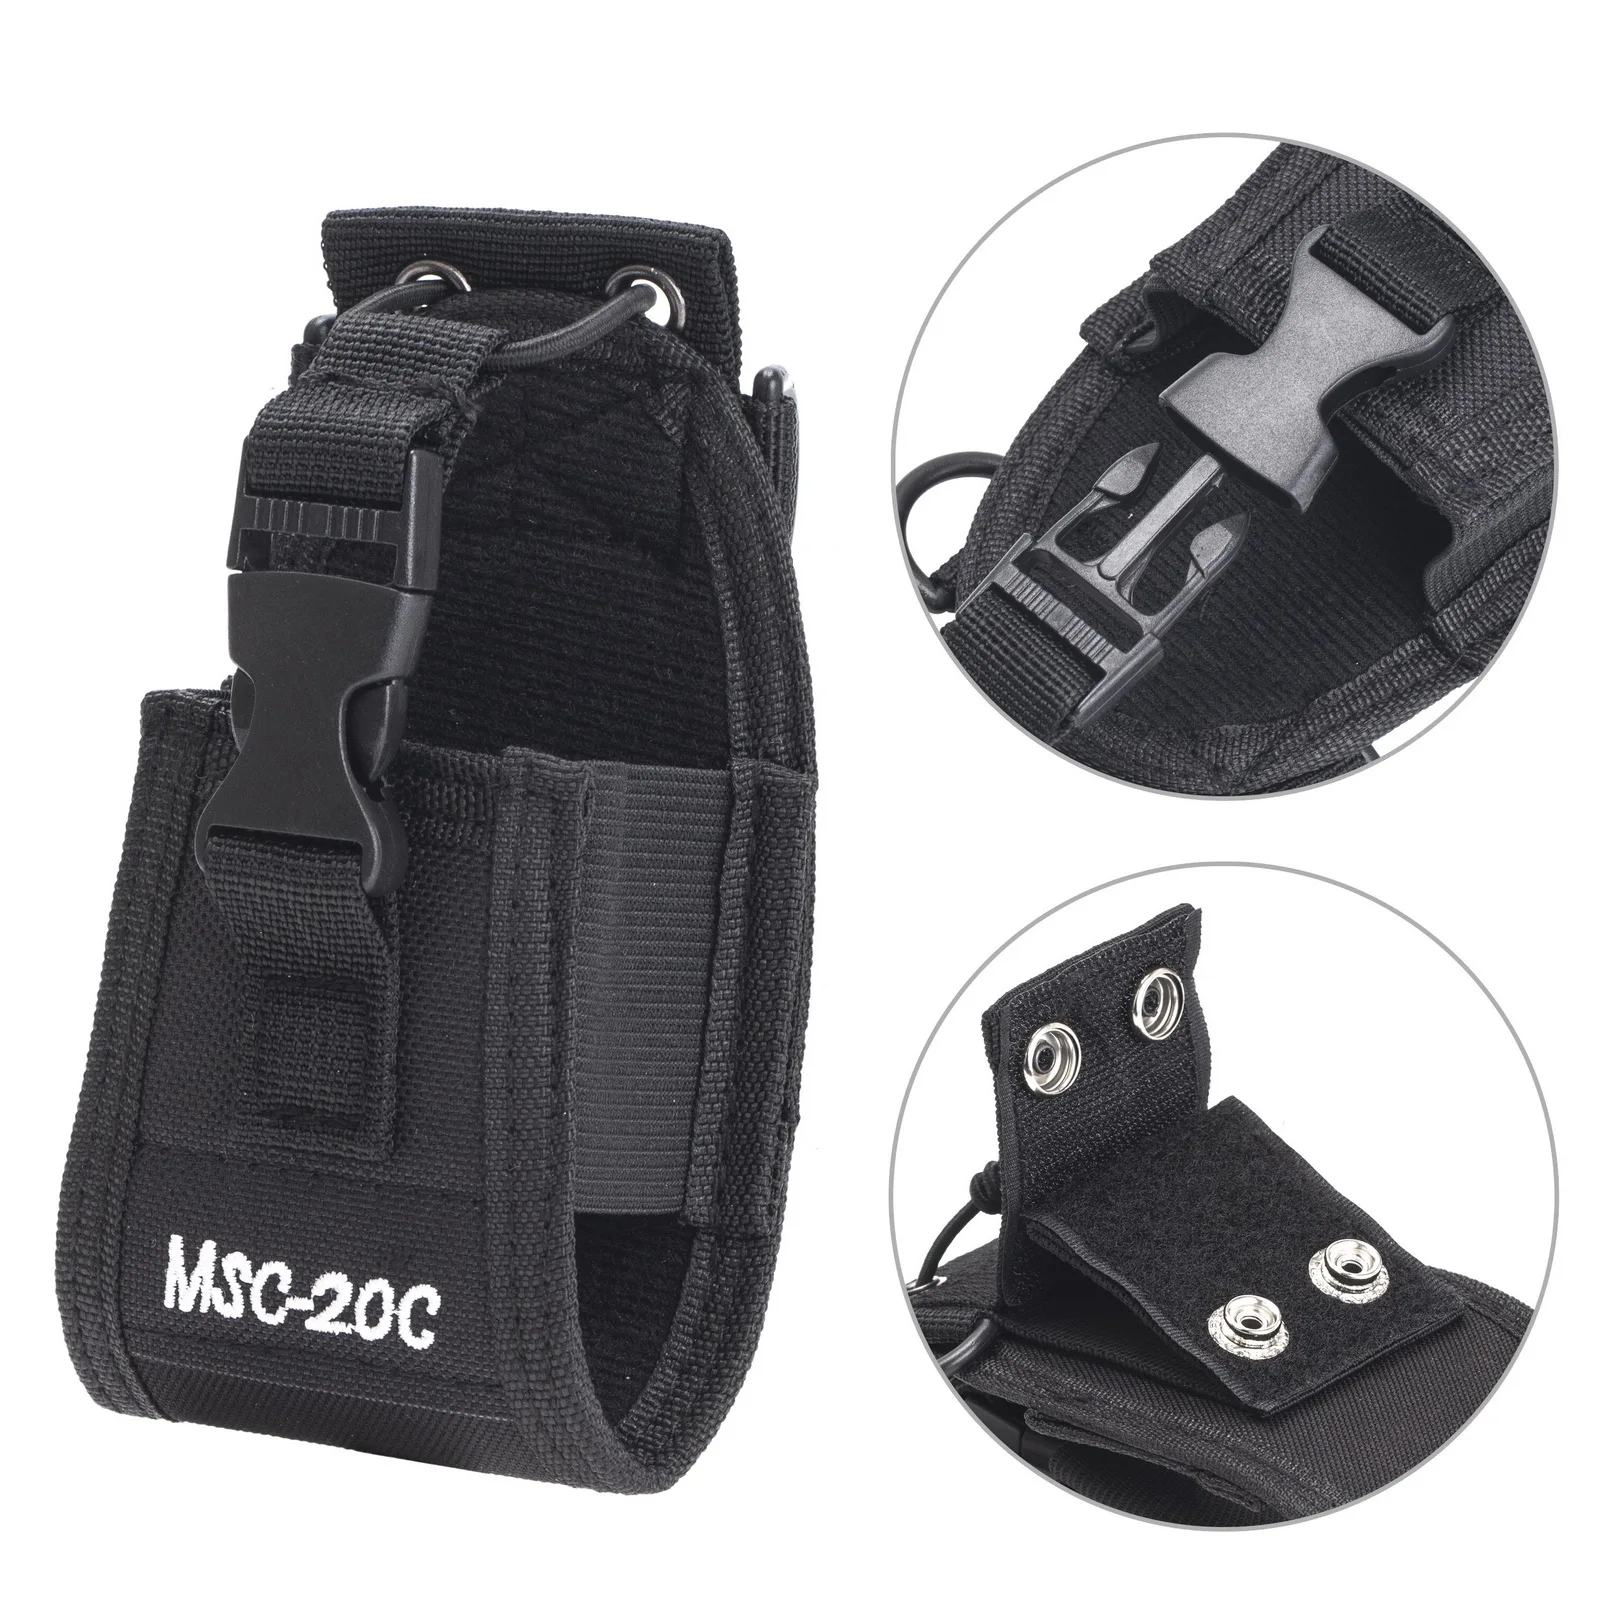 

MSC-20C Nylon Pouch Waist Bag Tactical Radio Walkie Talkie Case for Baofeng UV5R UV82 bf888S UV-9R TYT Mototrola Two Way Radio